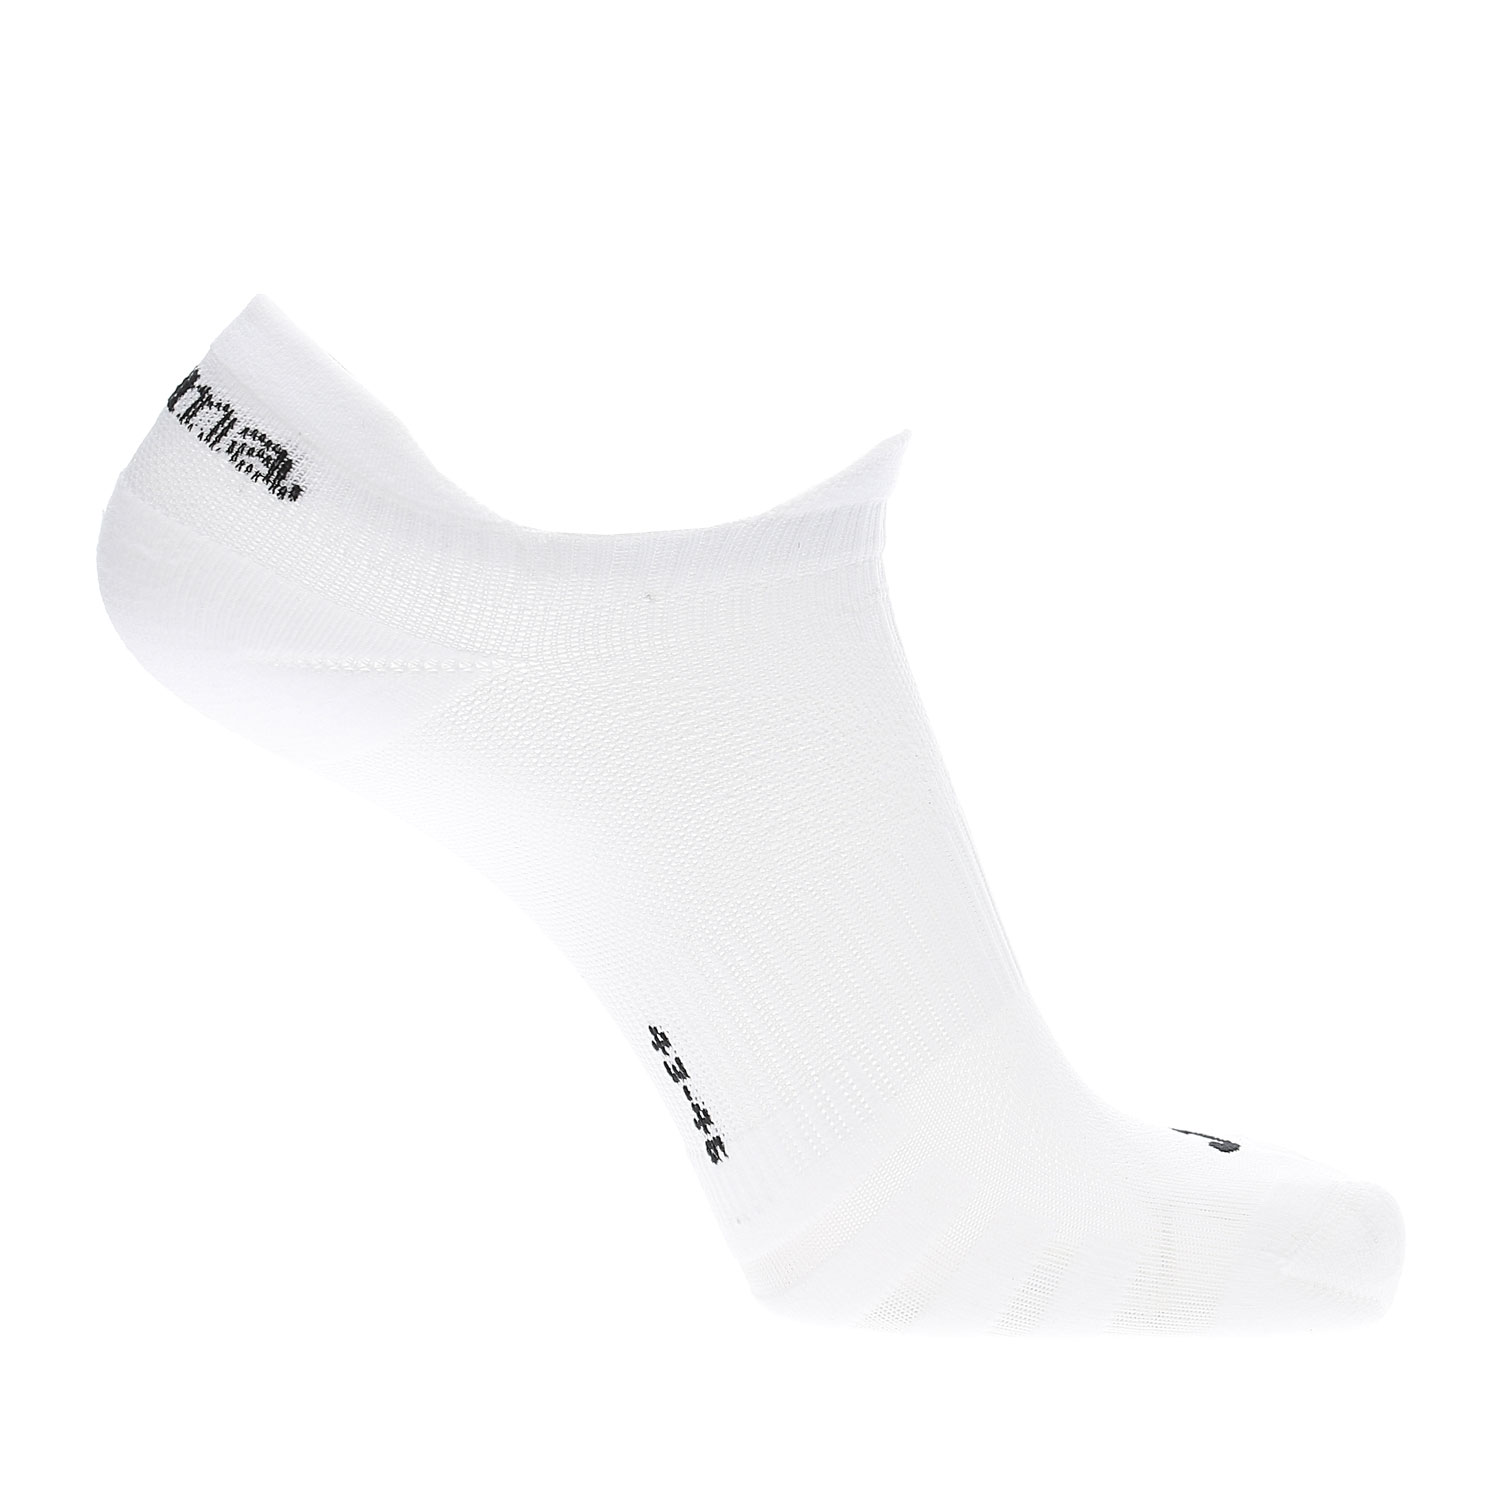 Joma Performance Socks - White